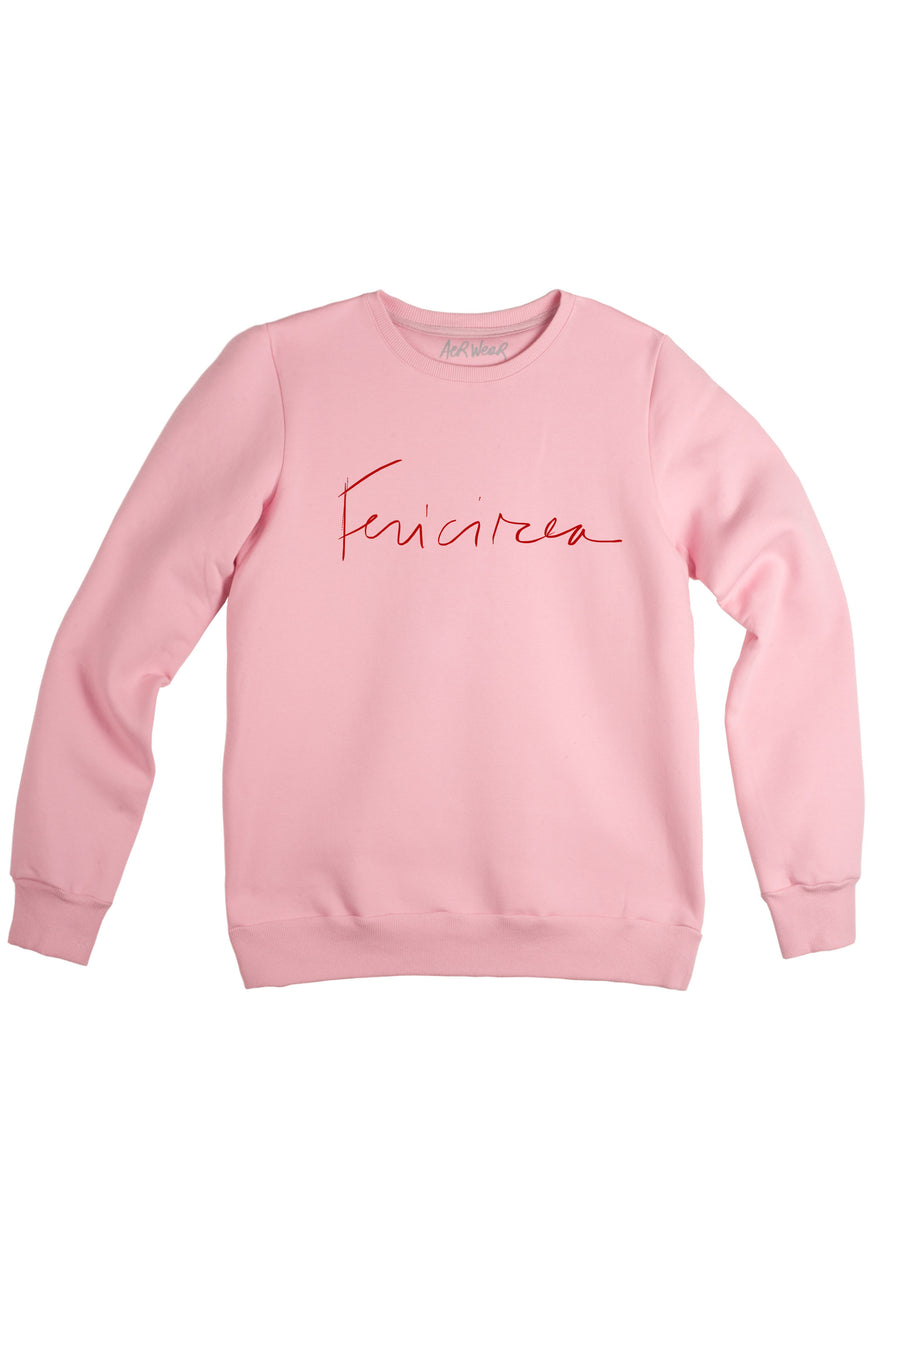 FERICIREA sweatshirt